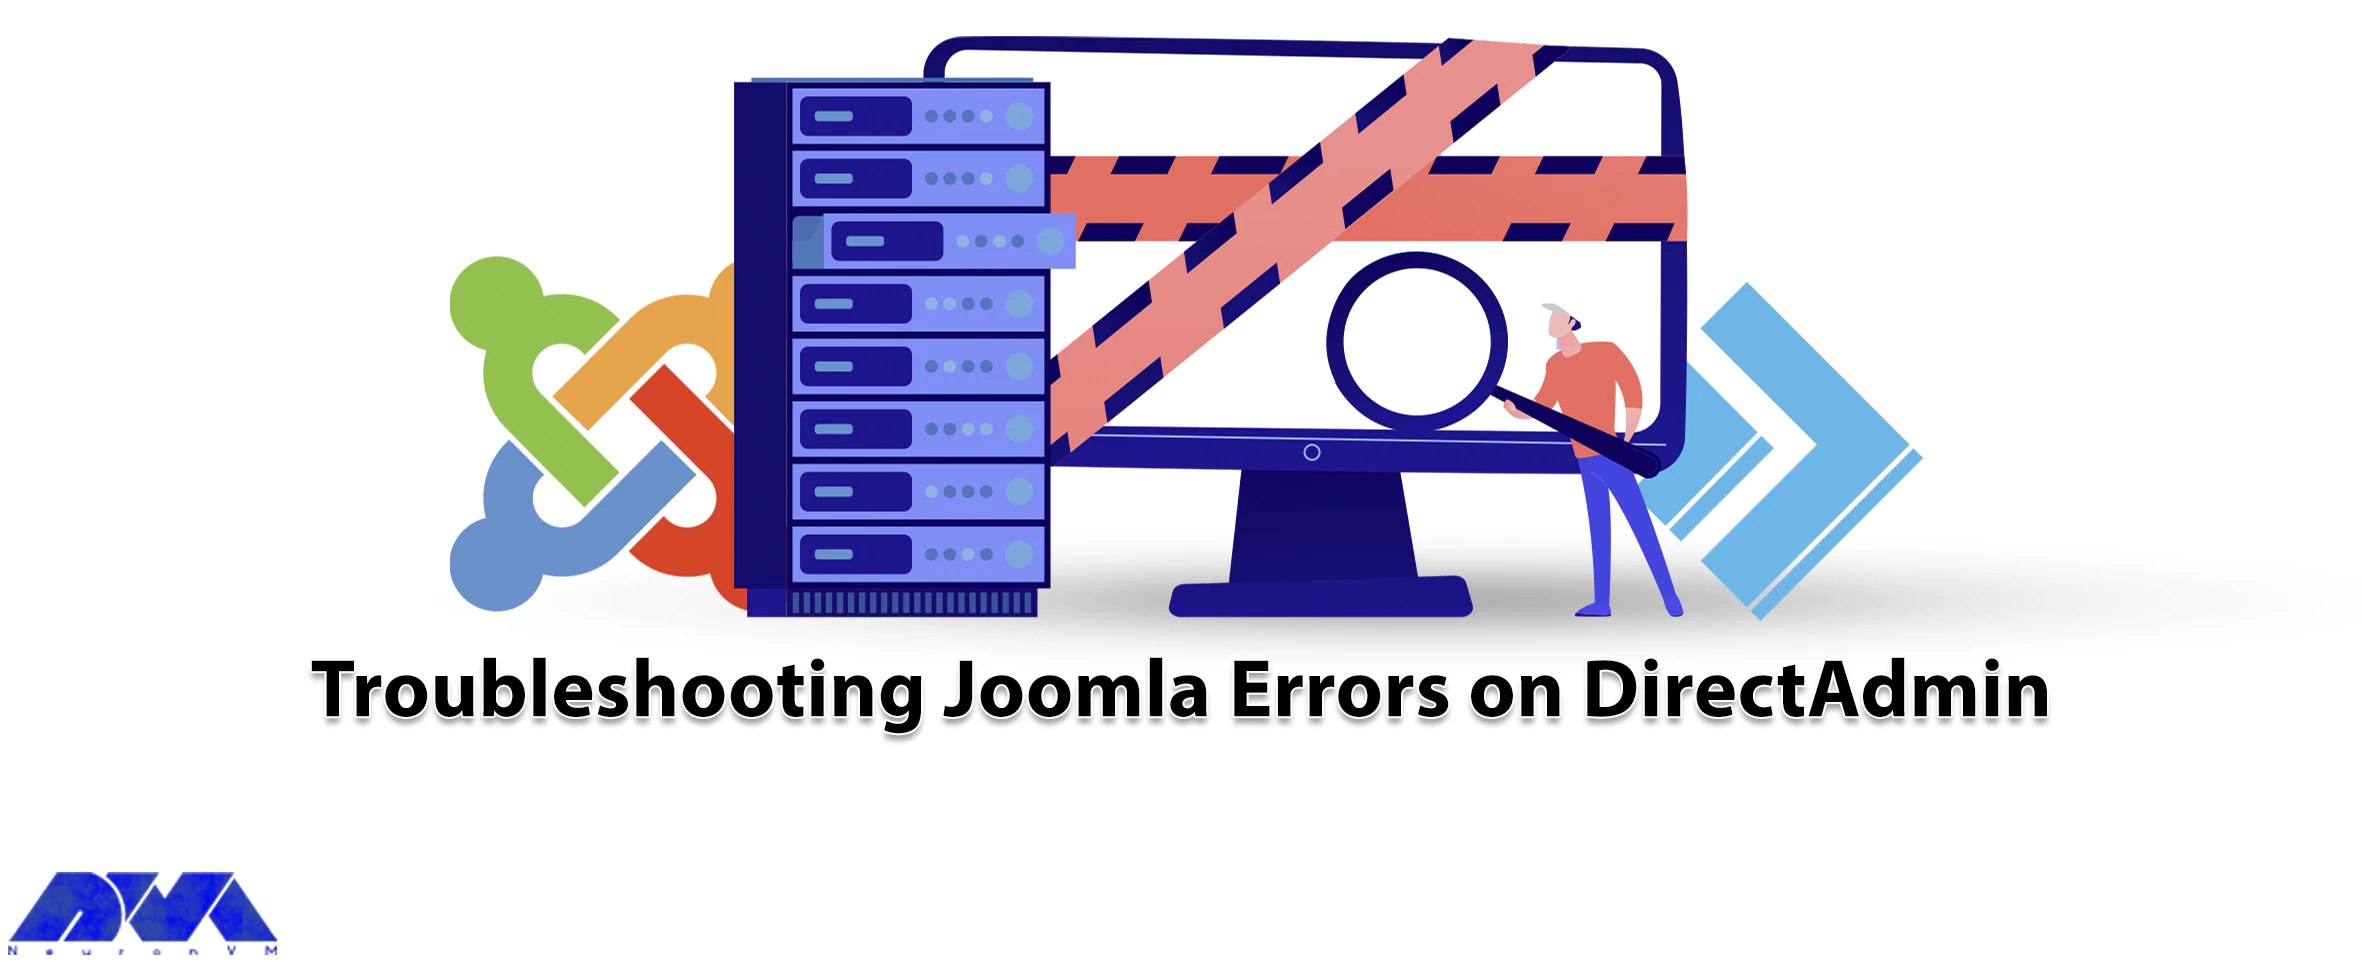 Troubleshooting Joomla Errors on DirectAdmin - NeuronVM